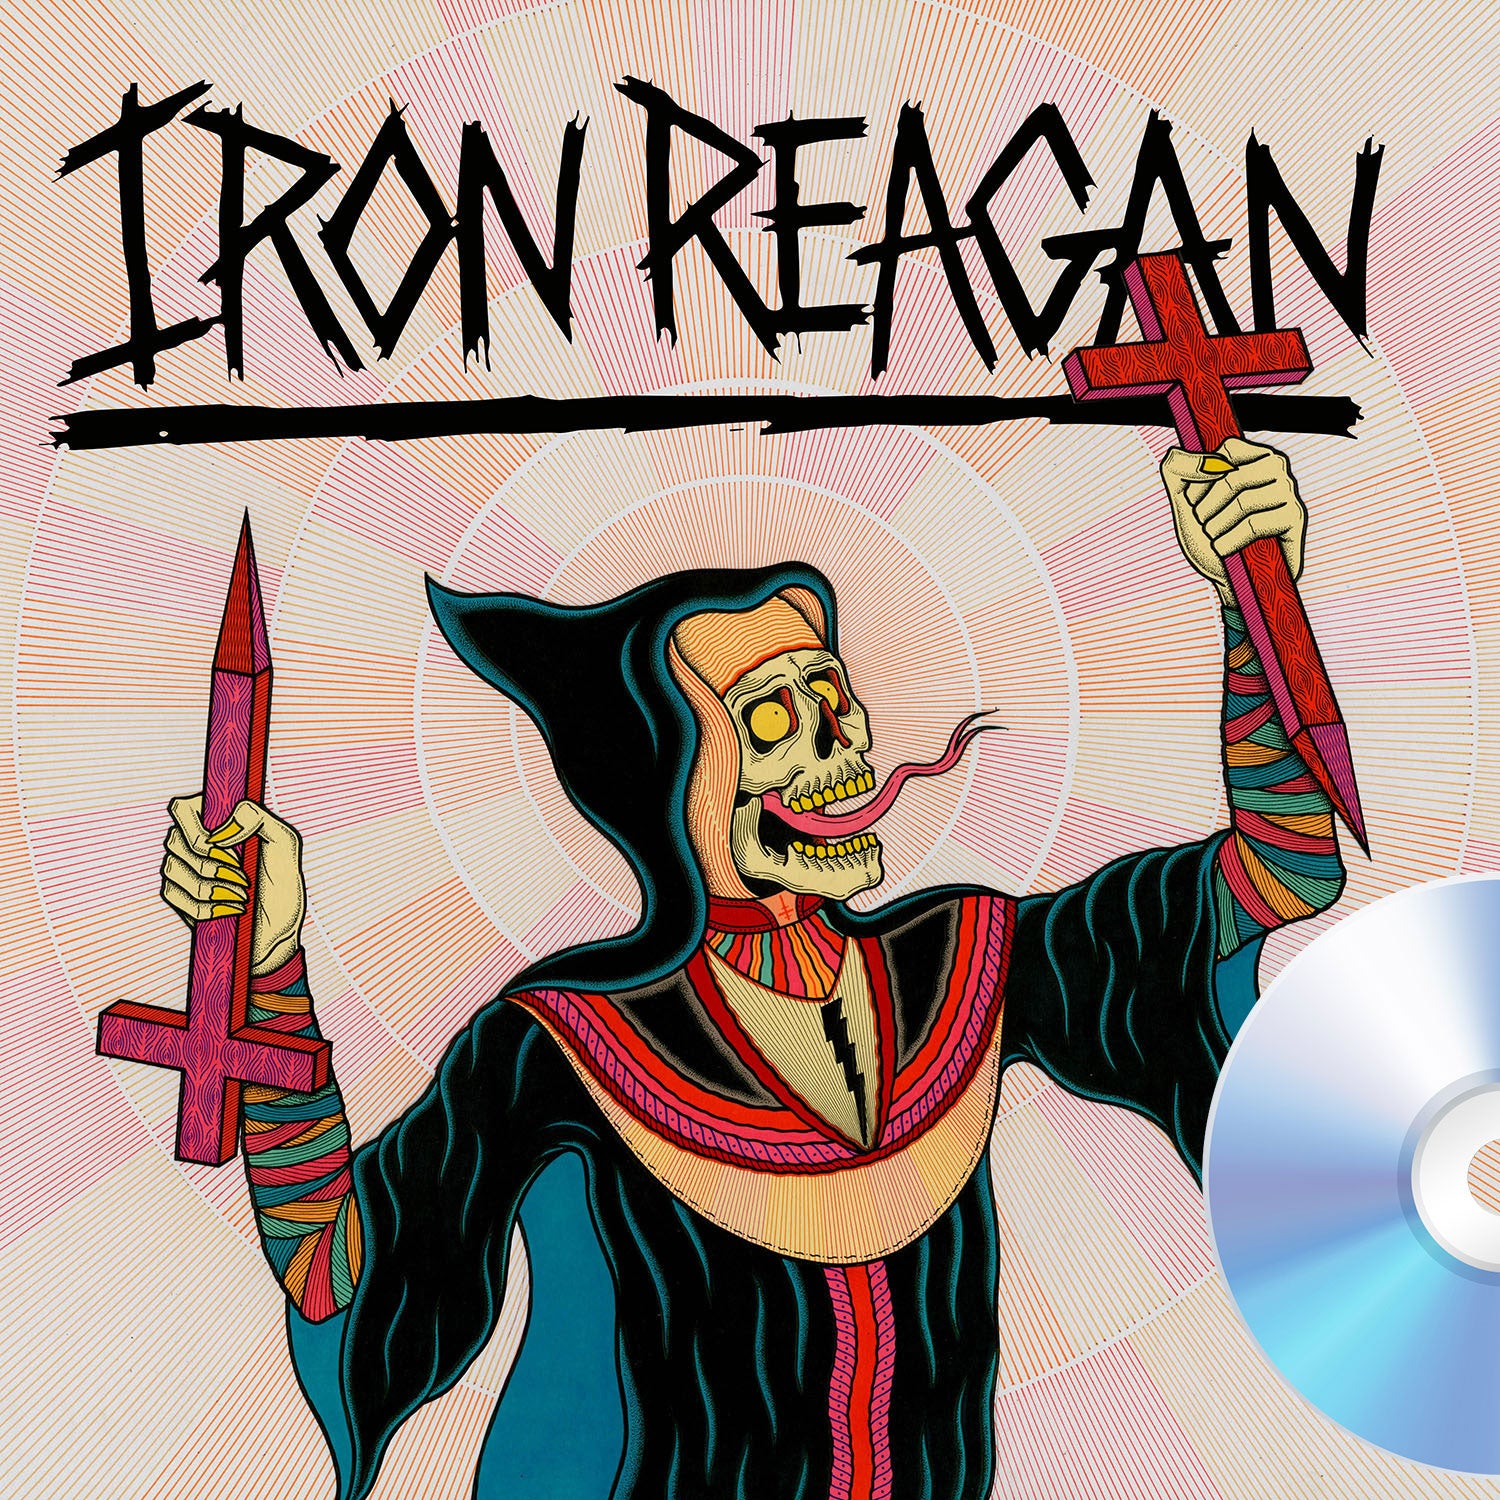 Iron Reagan "Crossover Ministry" CD